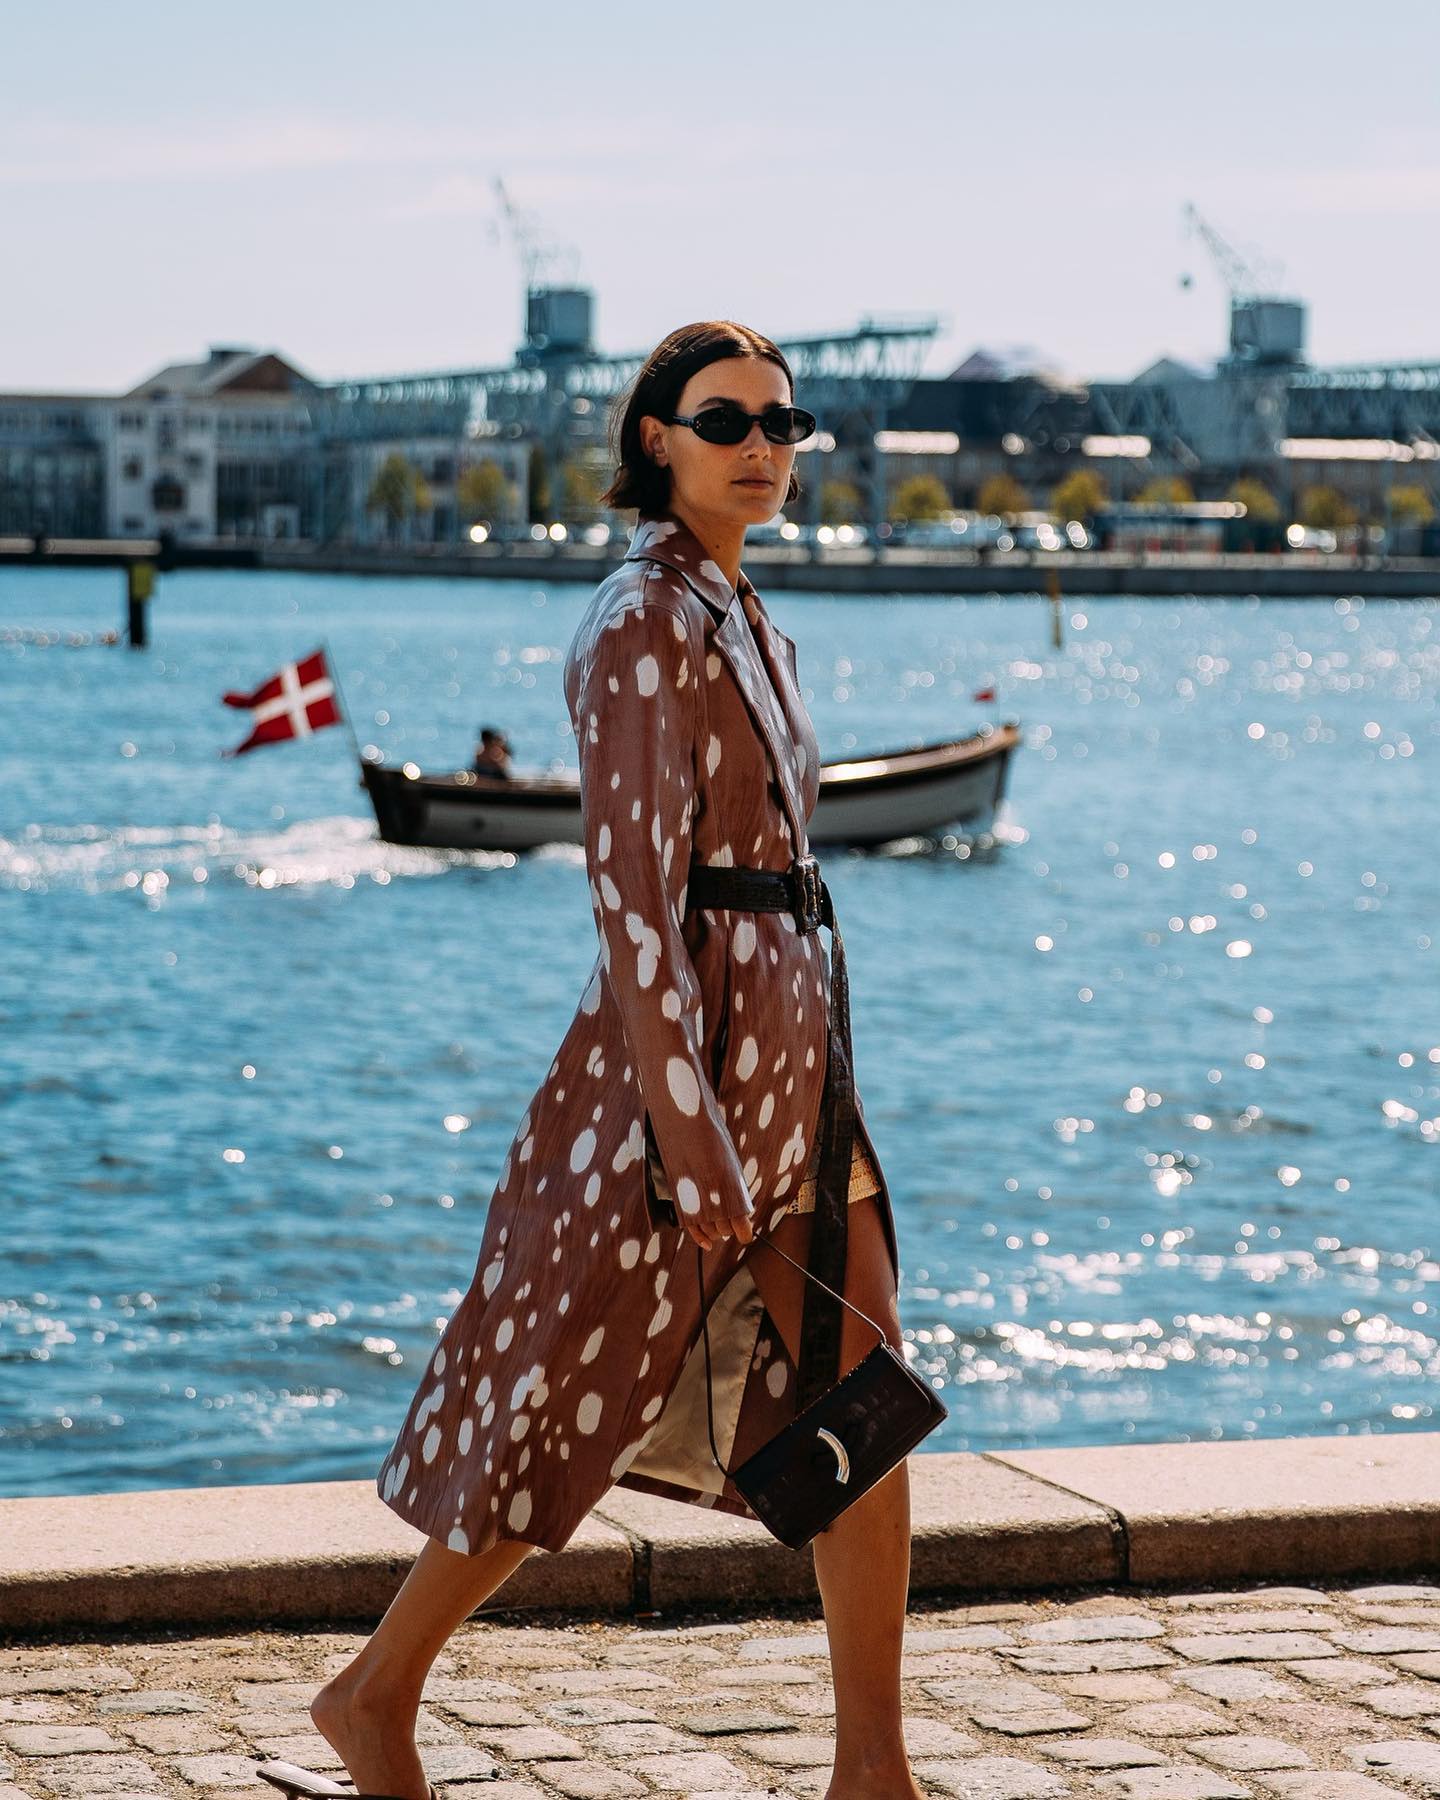 How To Style Ganni Like The Copenhagen Street Style Gang